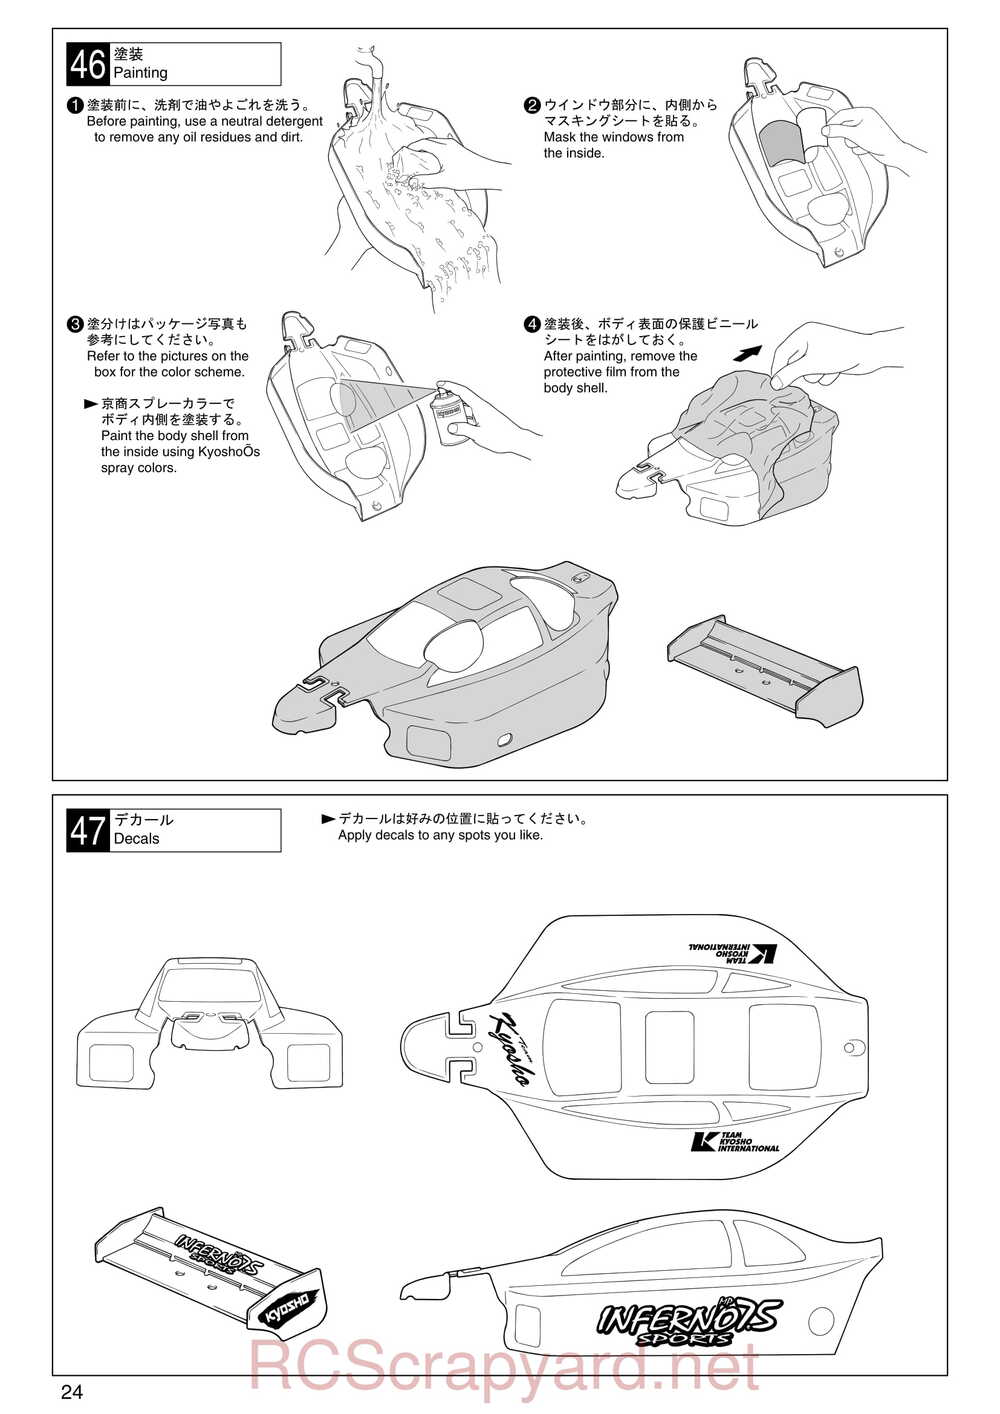 Kyosho - 31192 - Inferno-MP-7-5 Sports - Manual - Page 24